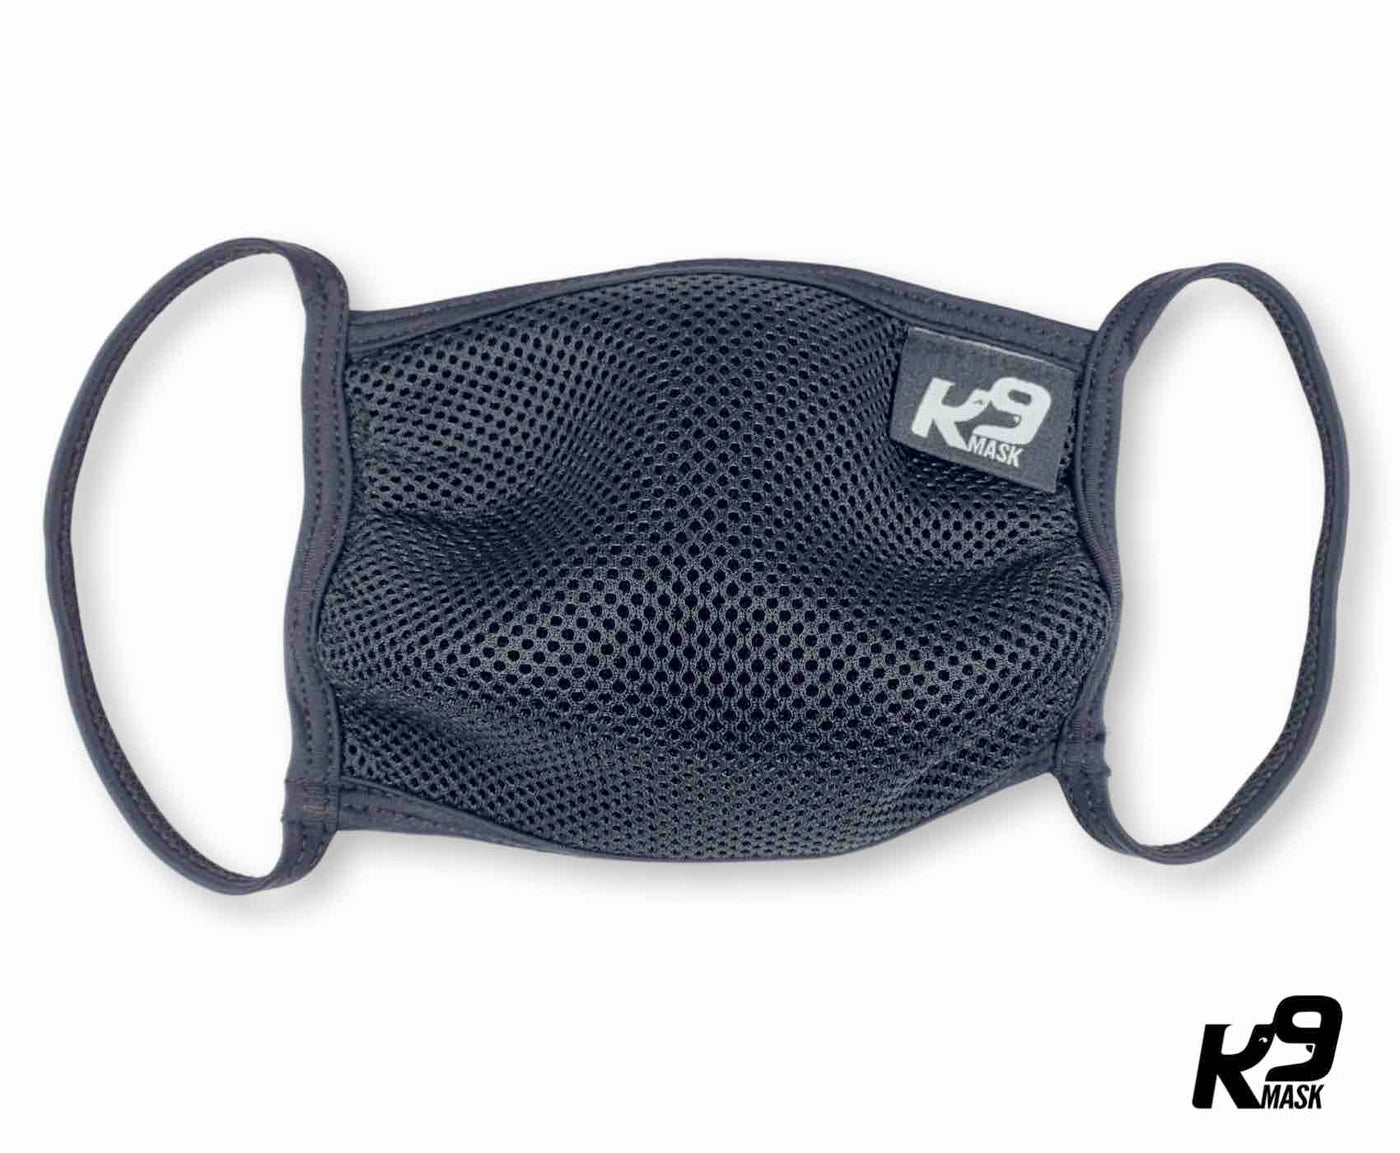 K9 Mask® for Humans clean breathe air face mask black